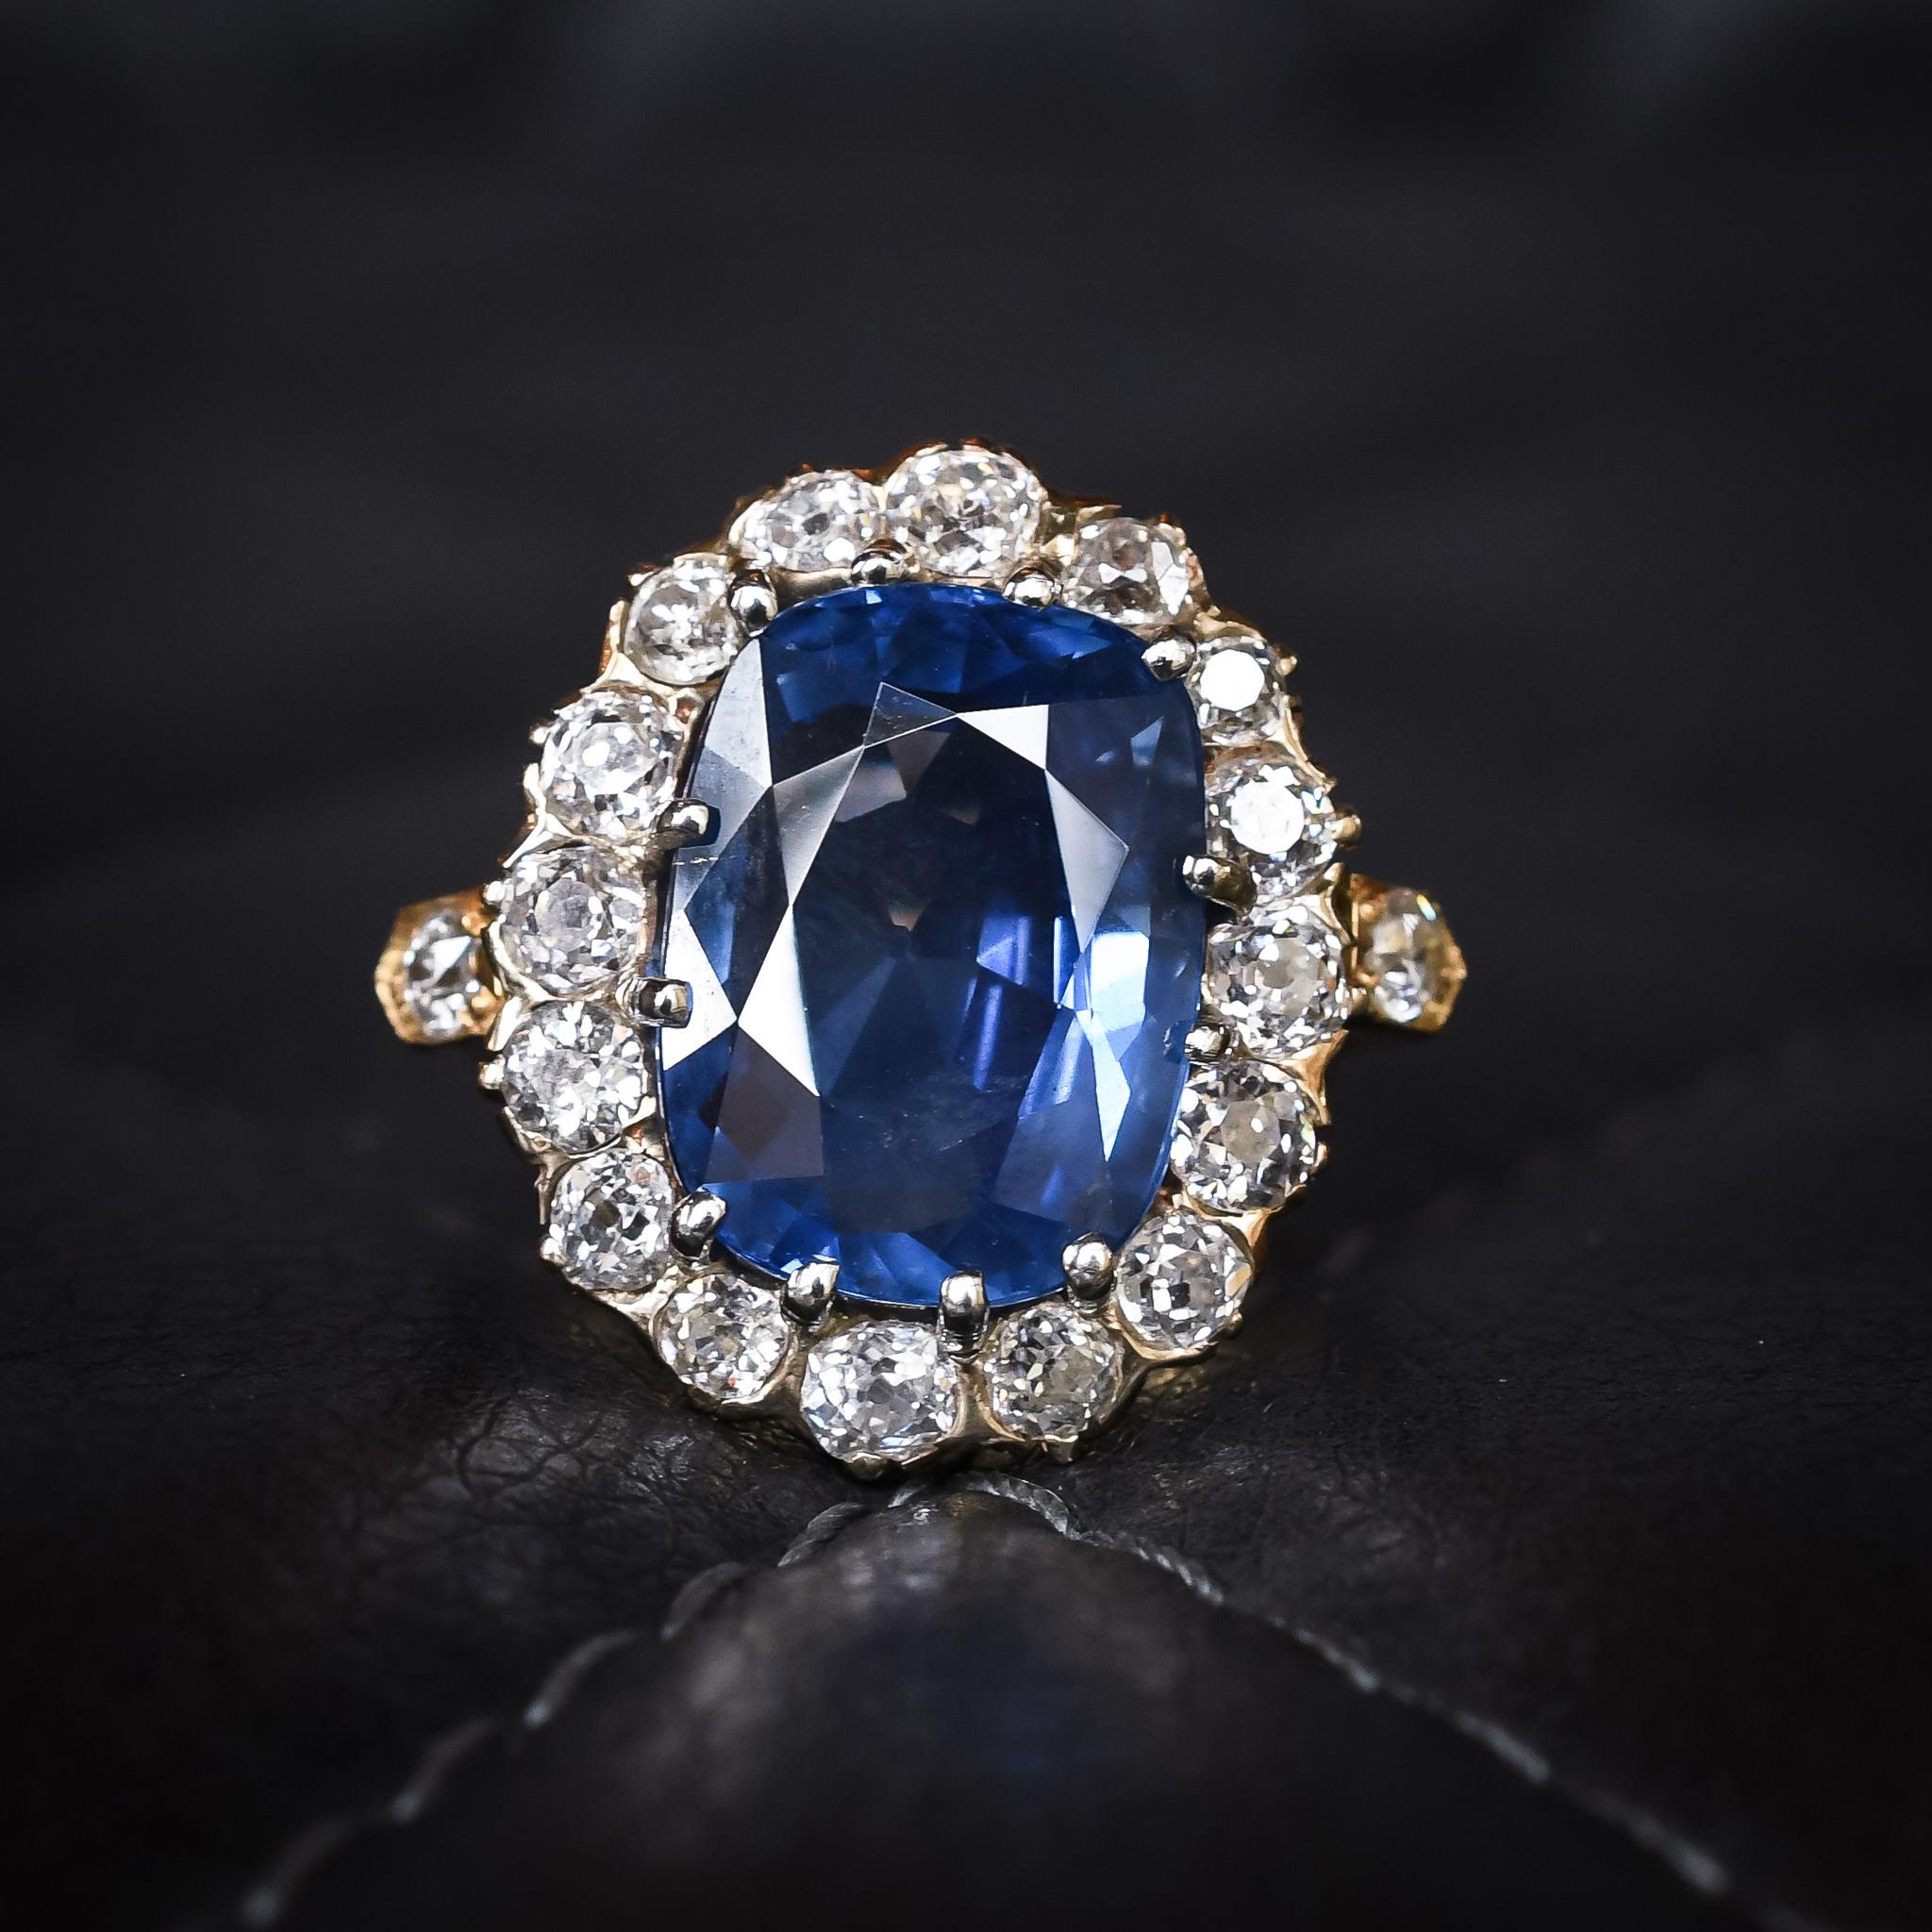 Cushion Cut Antique Victorian 13.5 Carat Burma Sapphire Diamond Cluster Ring For Sale